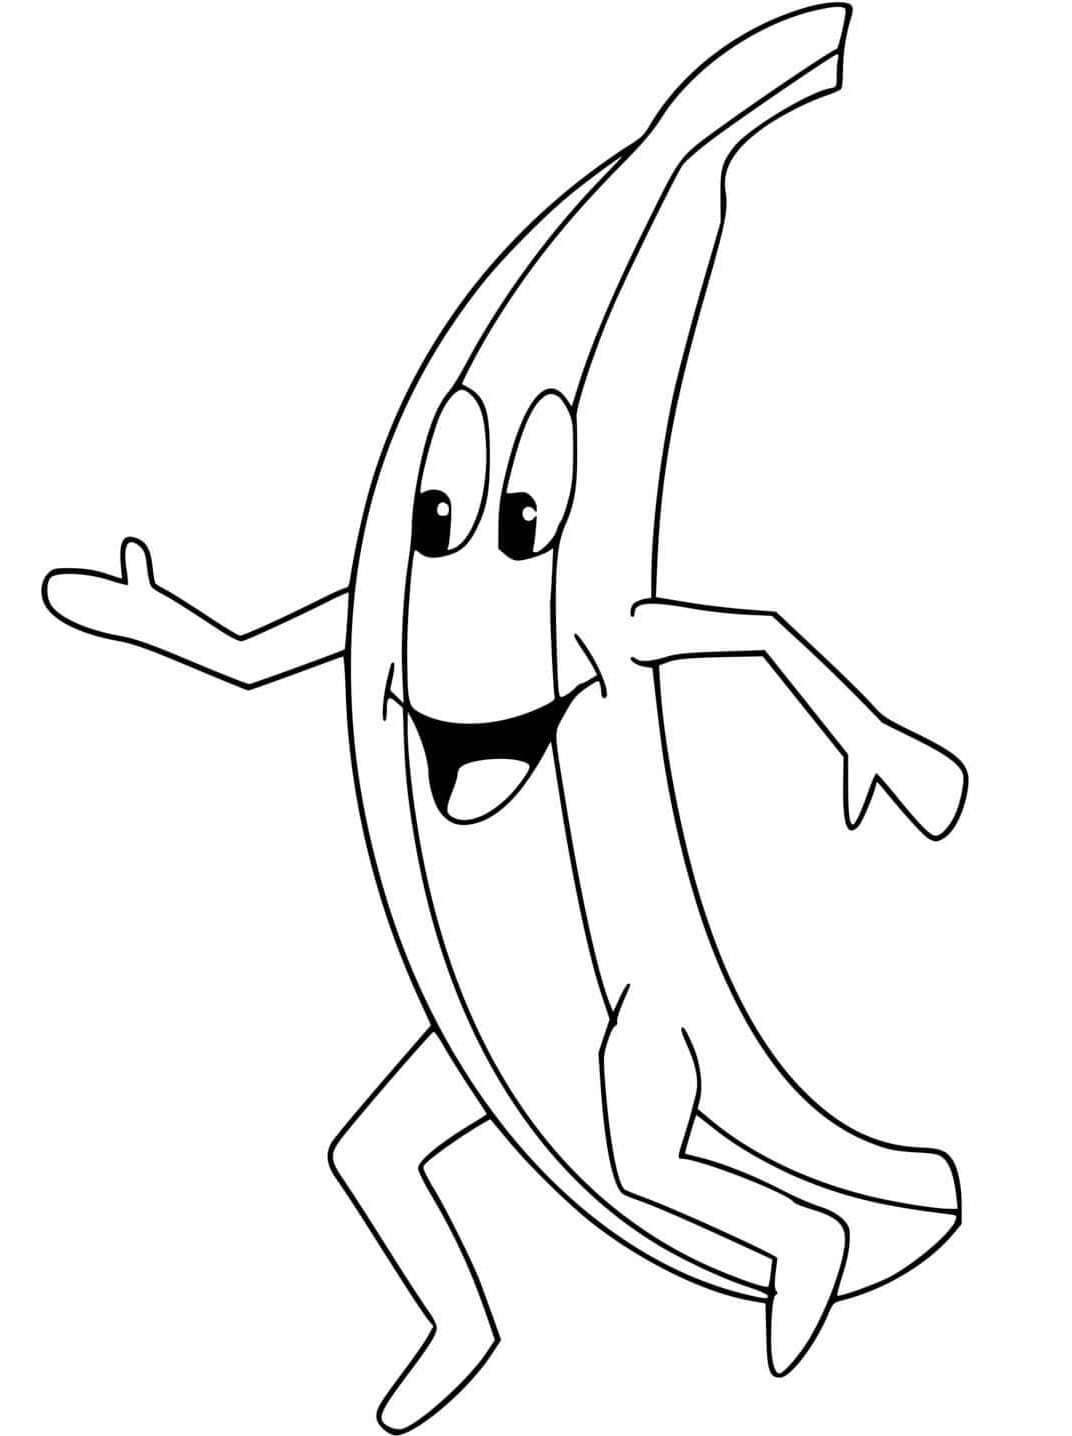 Banane Heureuse coloring page